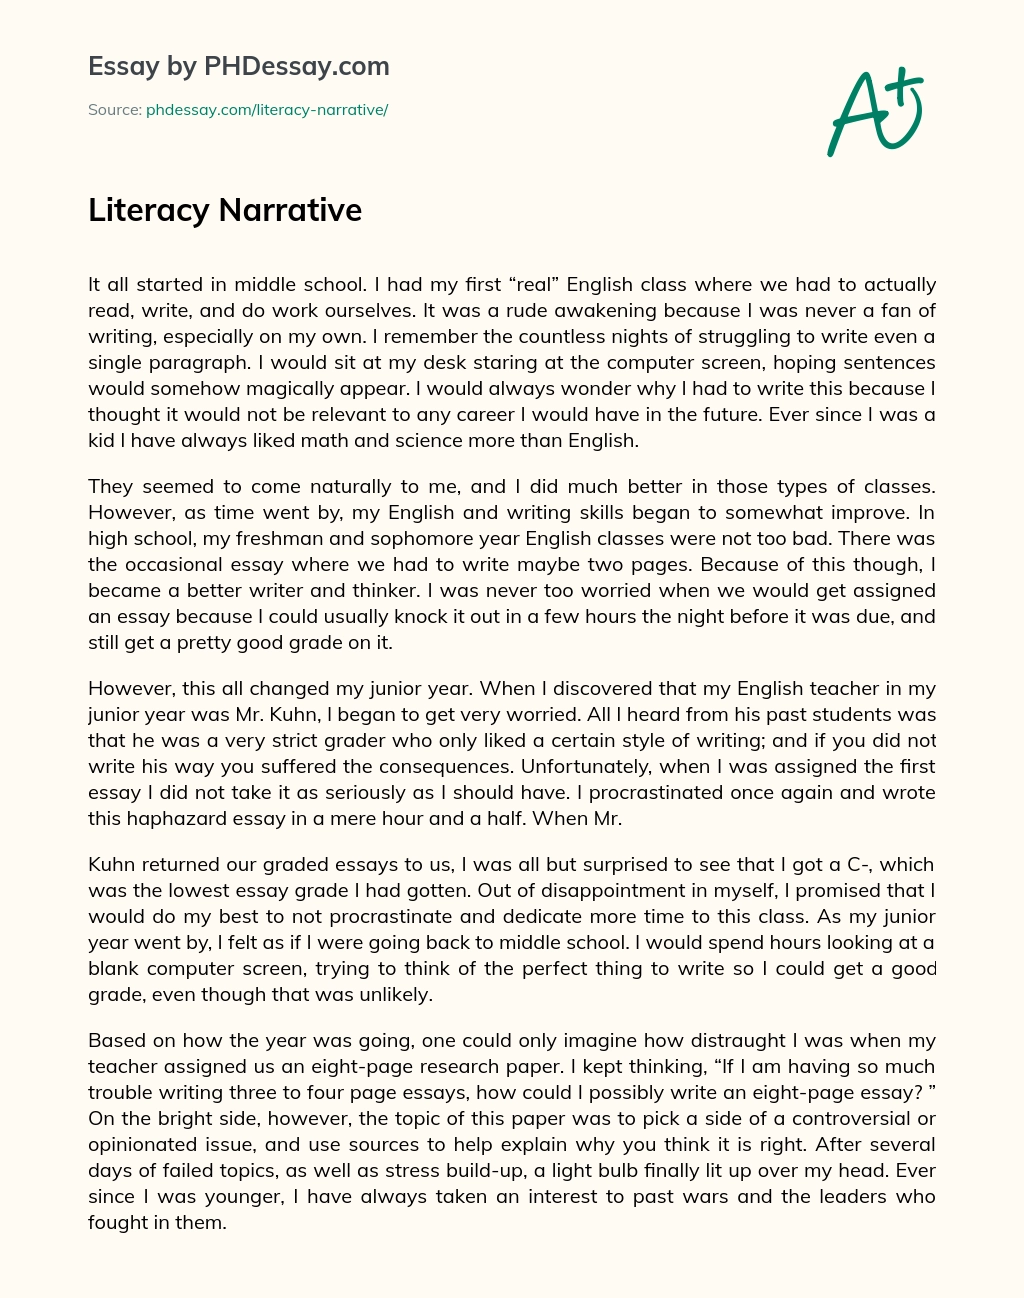 Literacy Narrative essay